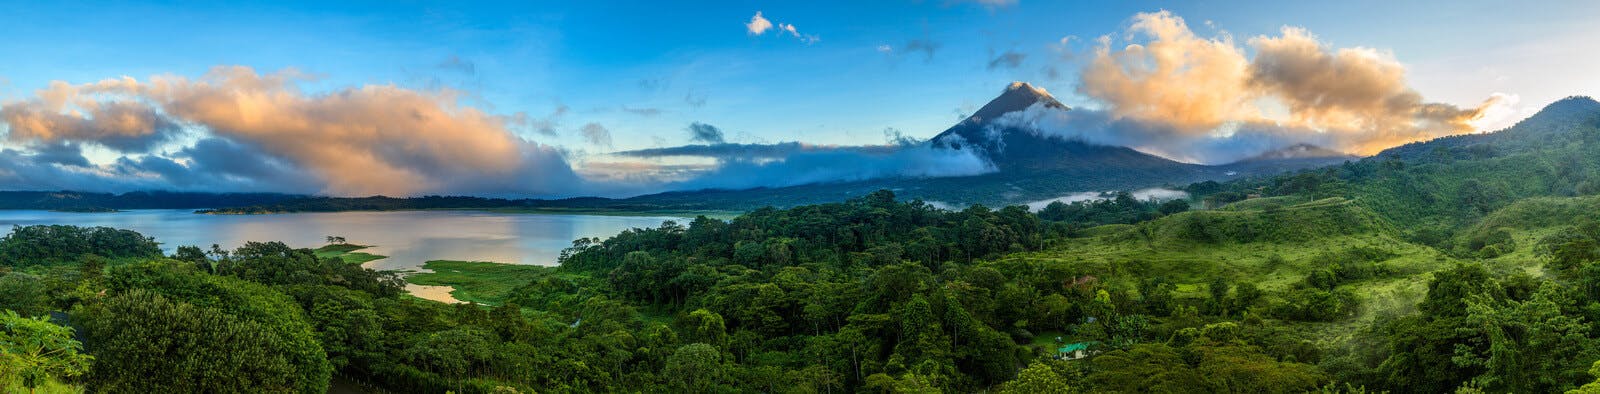 Panorama of Costa Rica Arenal volcano